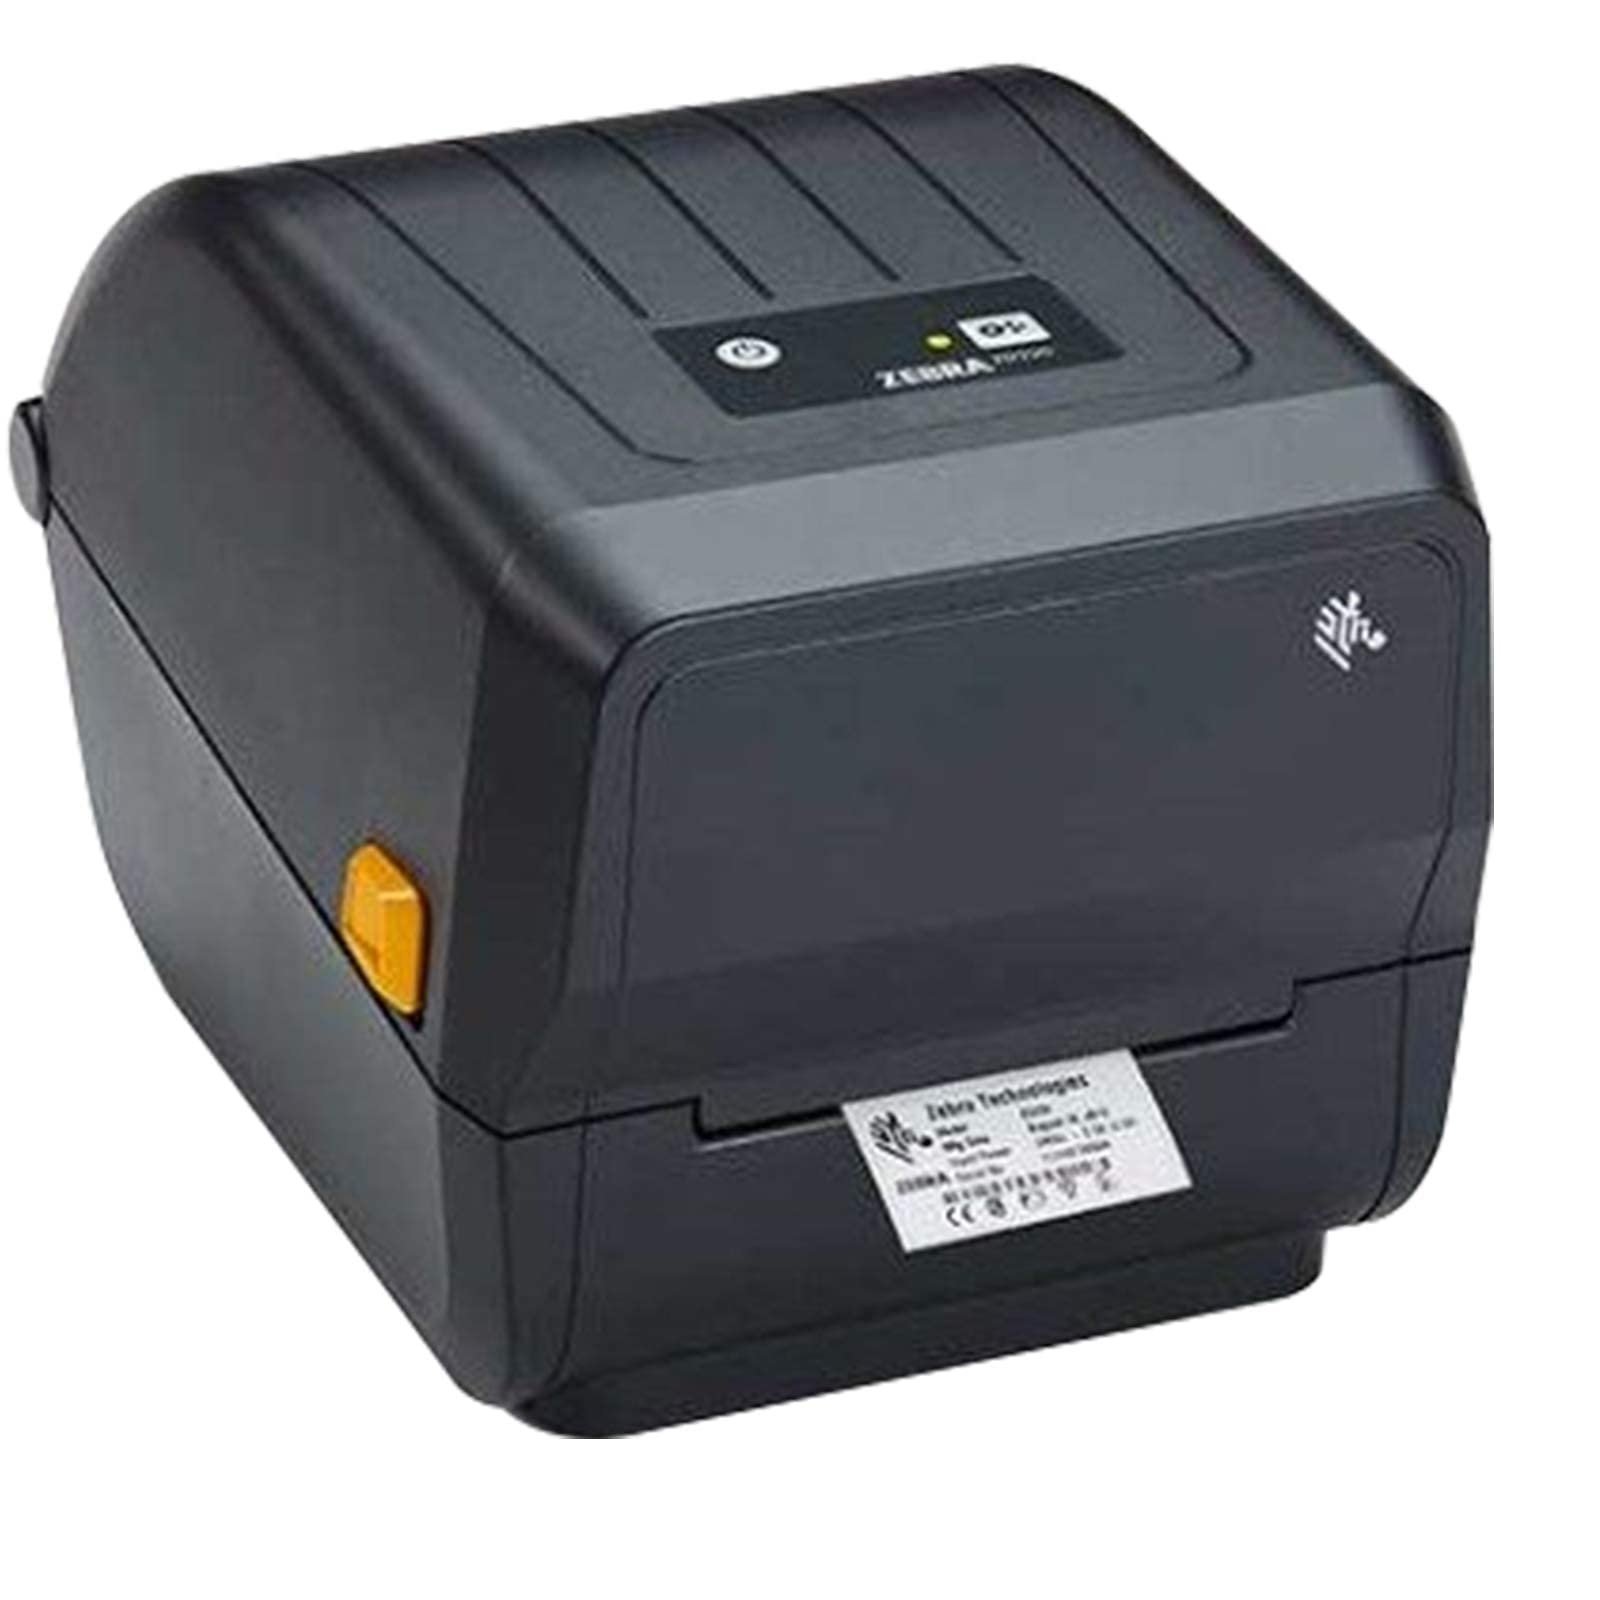 Zebra ZD230 ZD230t Barcode Printer